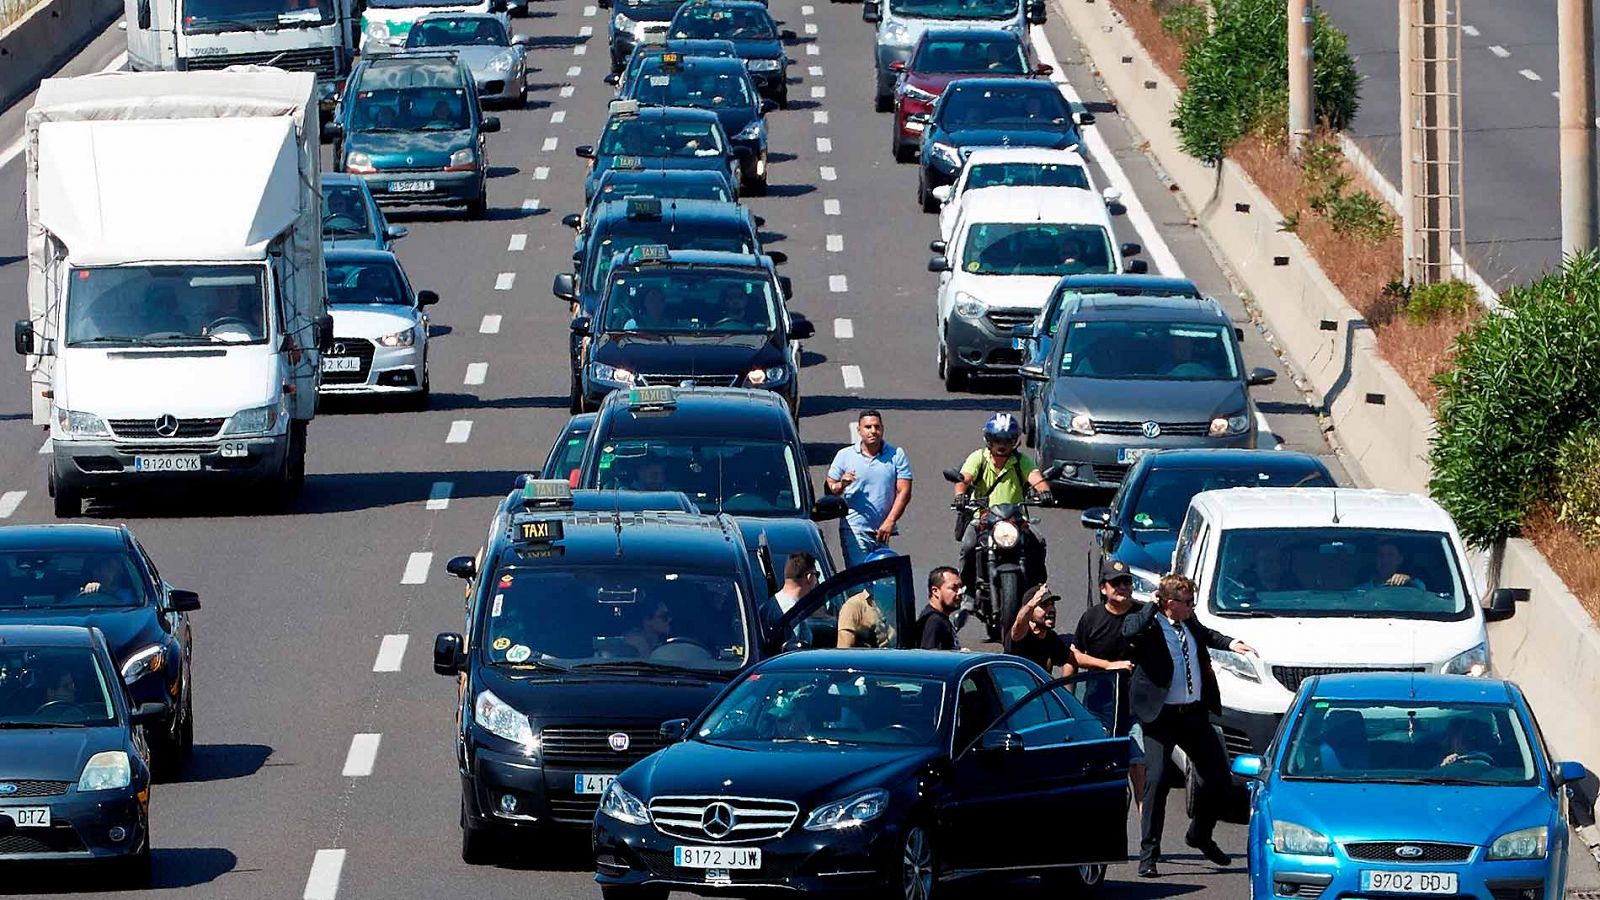 Huelga de taxis en Barcelona | marcha lenta en la segunda jornada